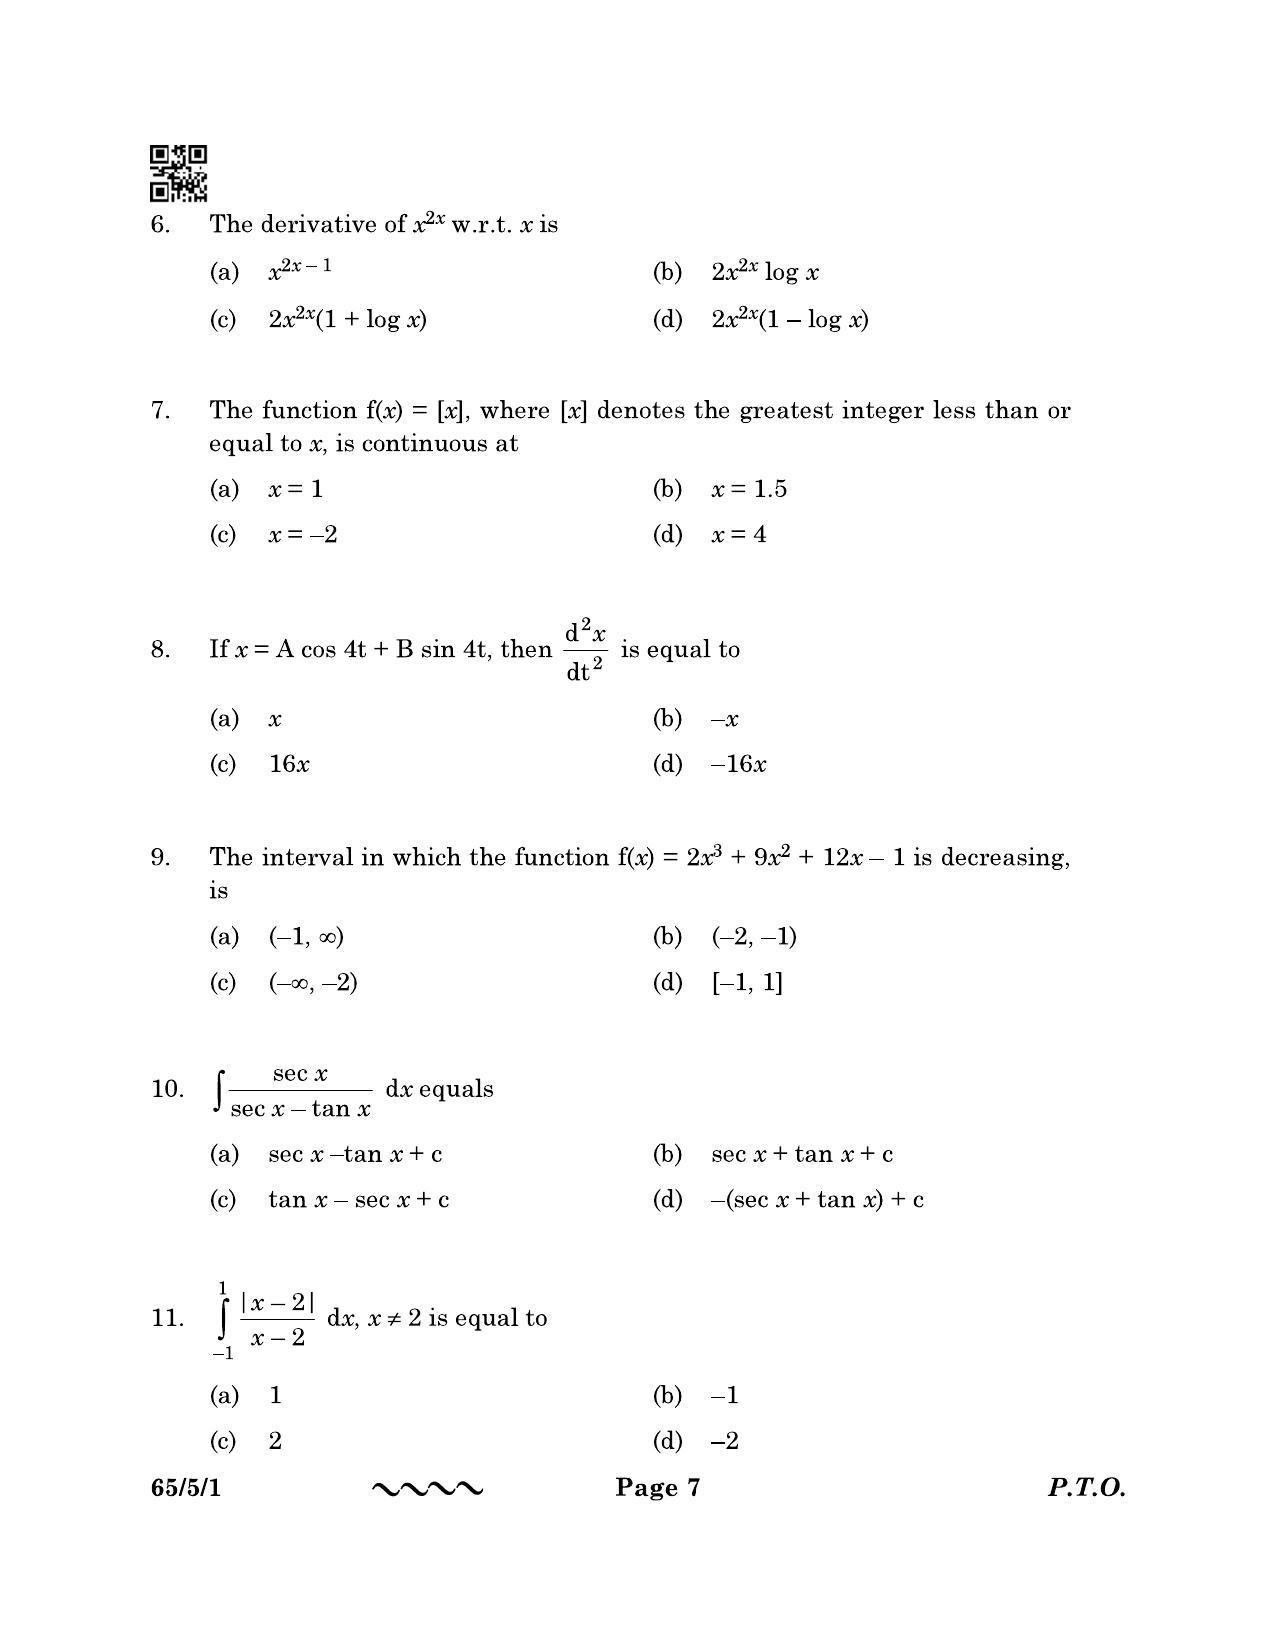 CBSE Class 12 65-5-1 MATHEMATICS 2023 Question Paper - Page 7